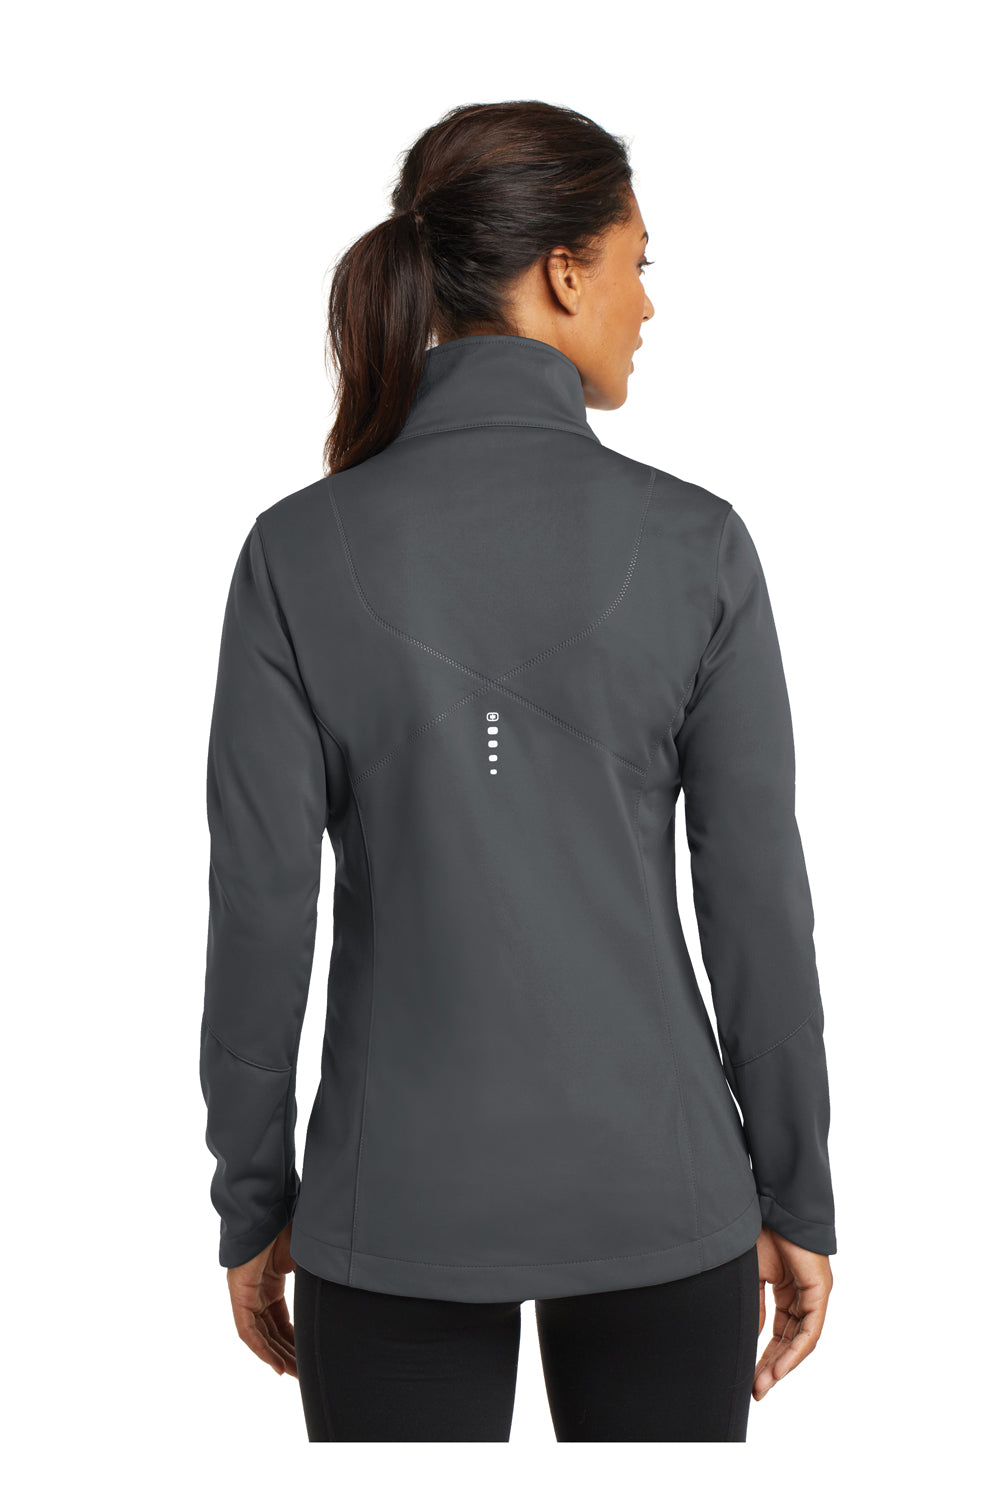 Ogio LOE720 Womens Endurance Crux Wind & Water Resistant Full Zip Jacket Gear Grey Back